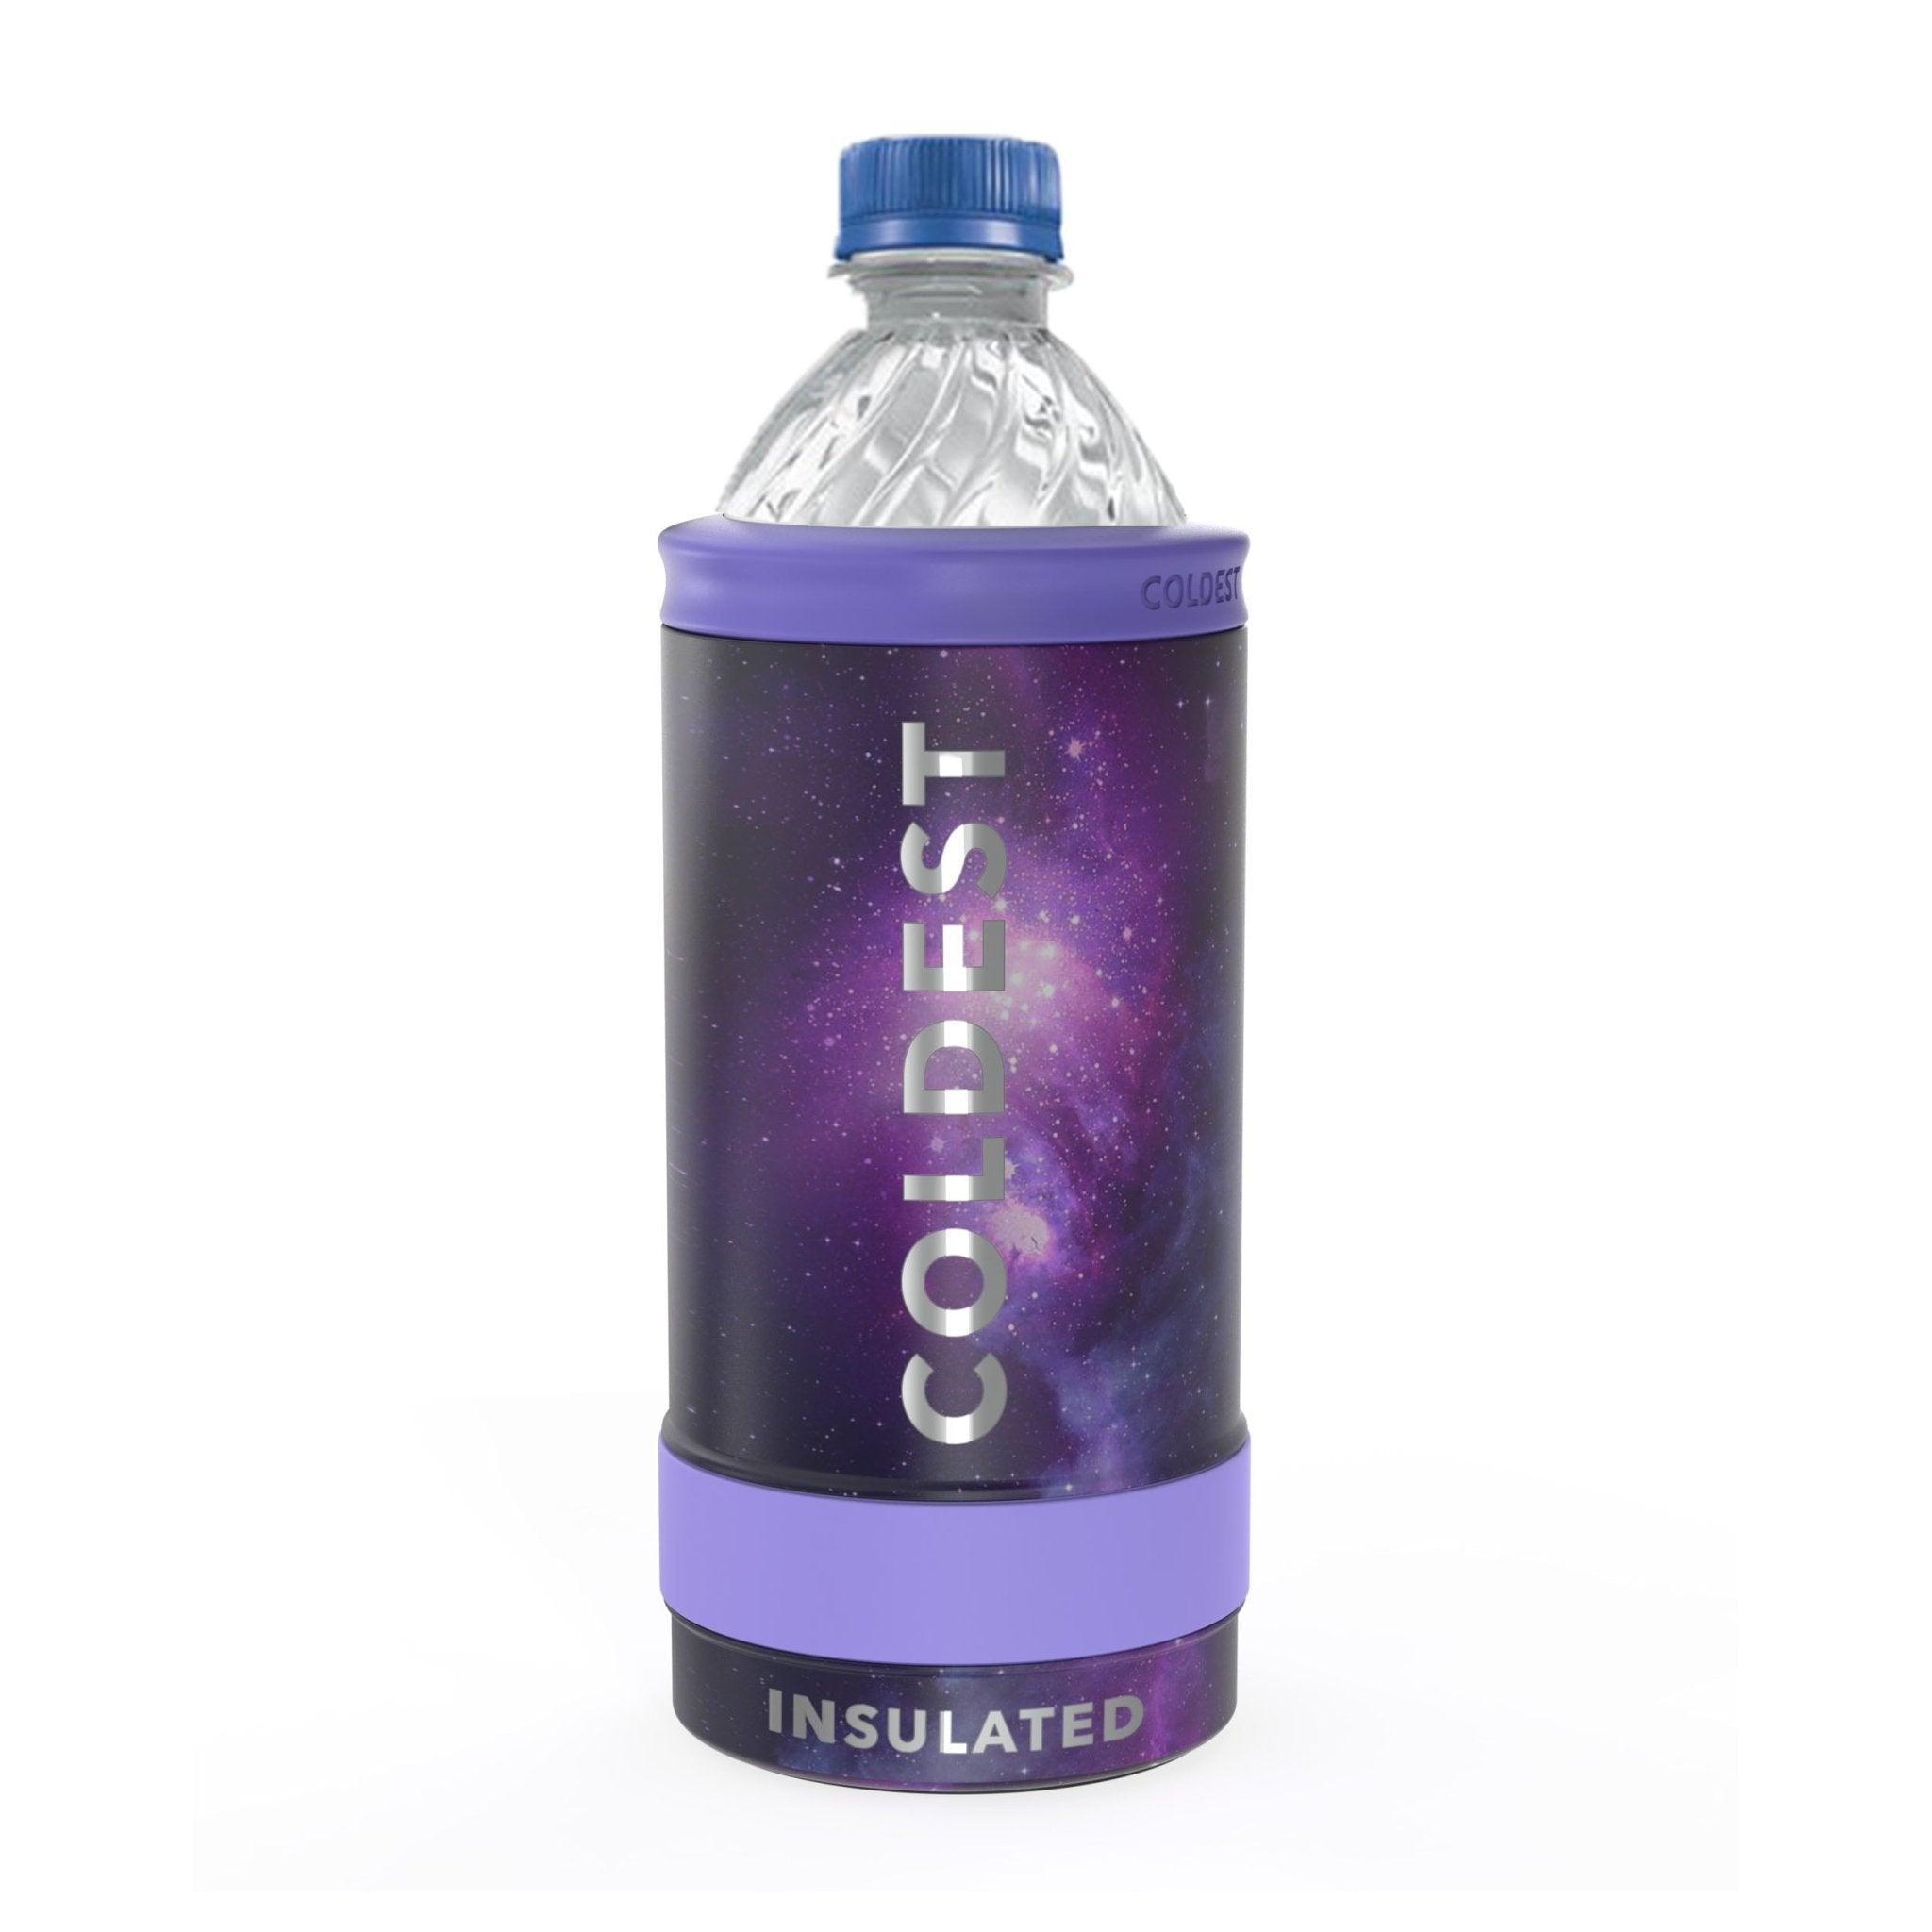 Coldest 4-in-1 Bottle Can Cooler